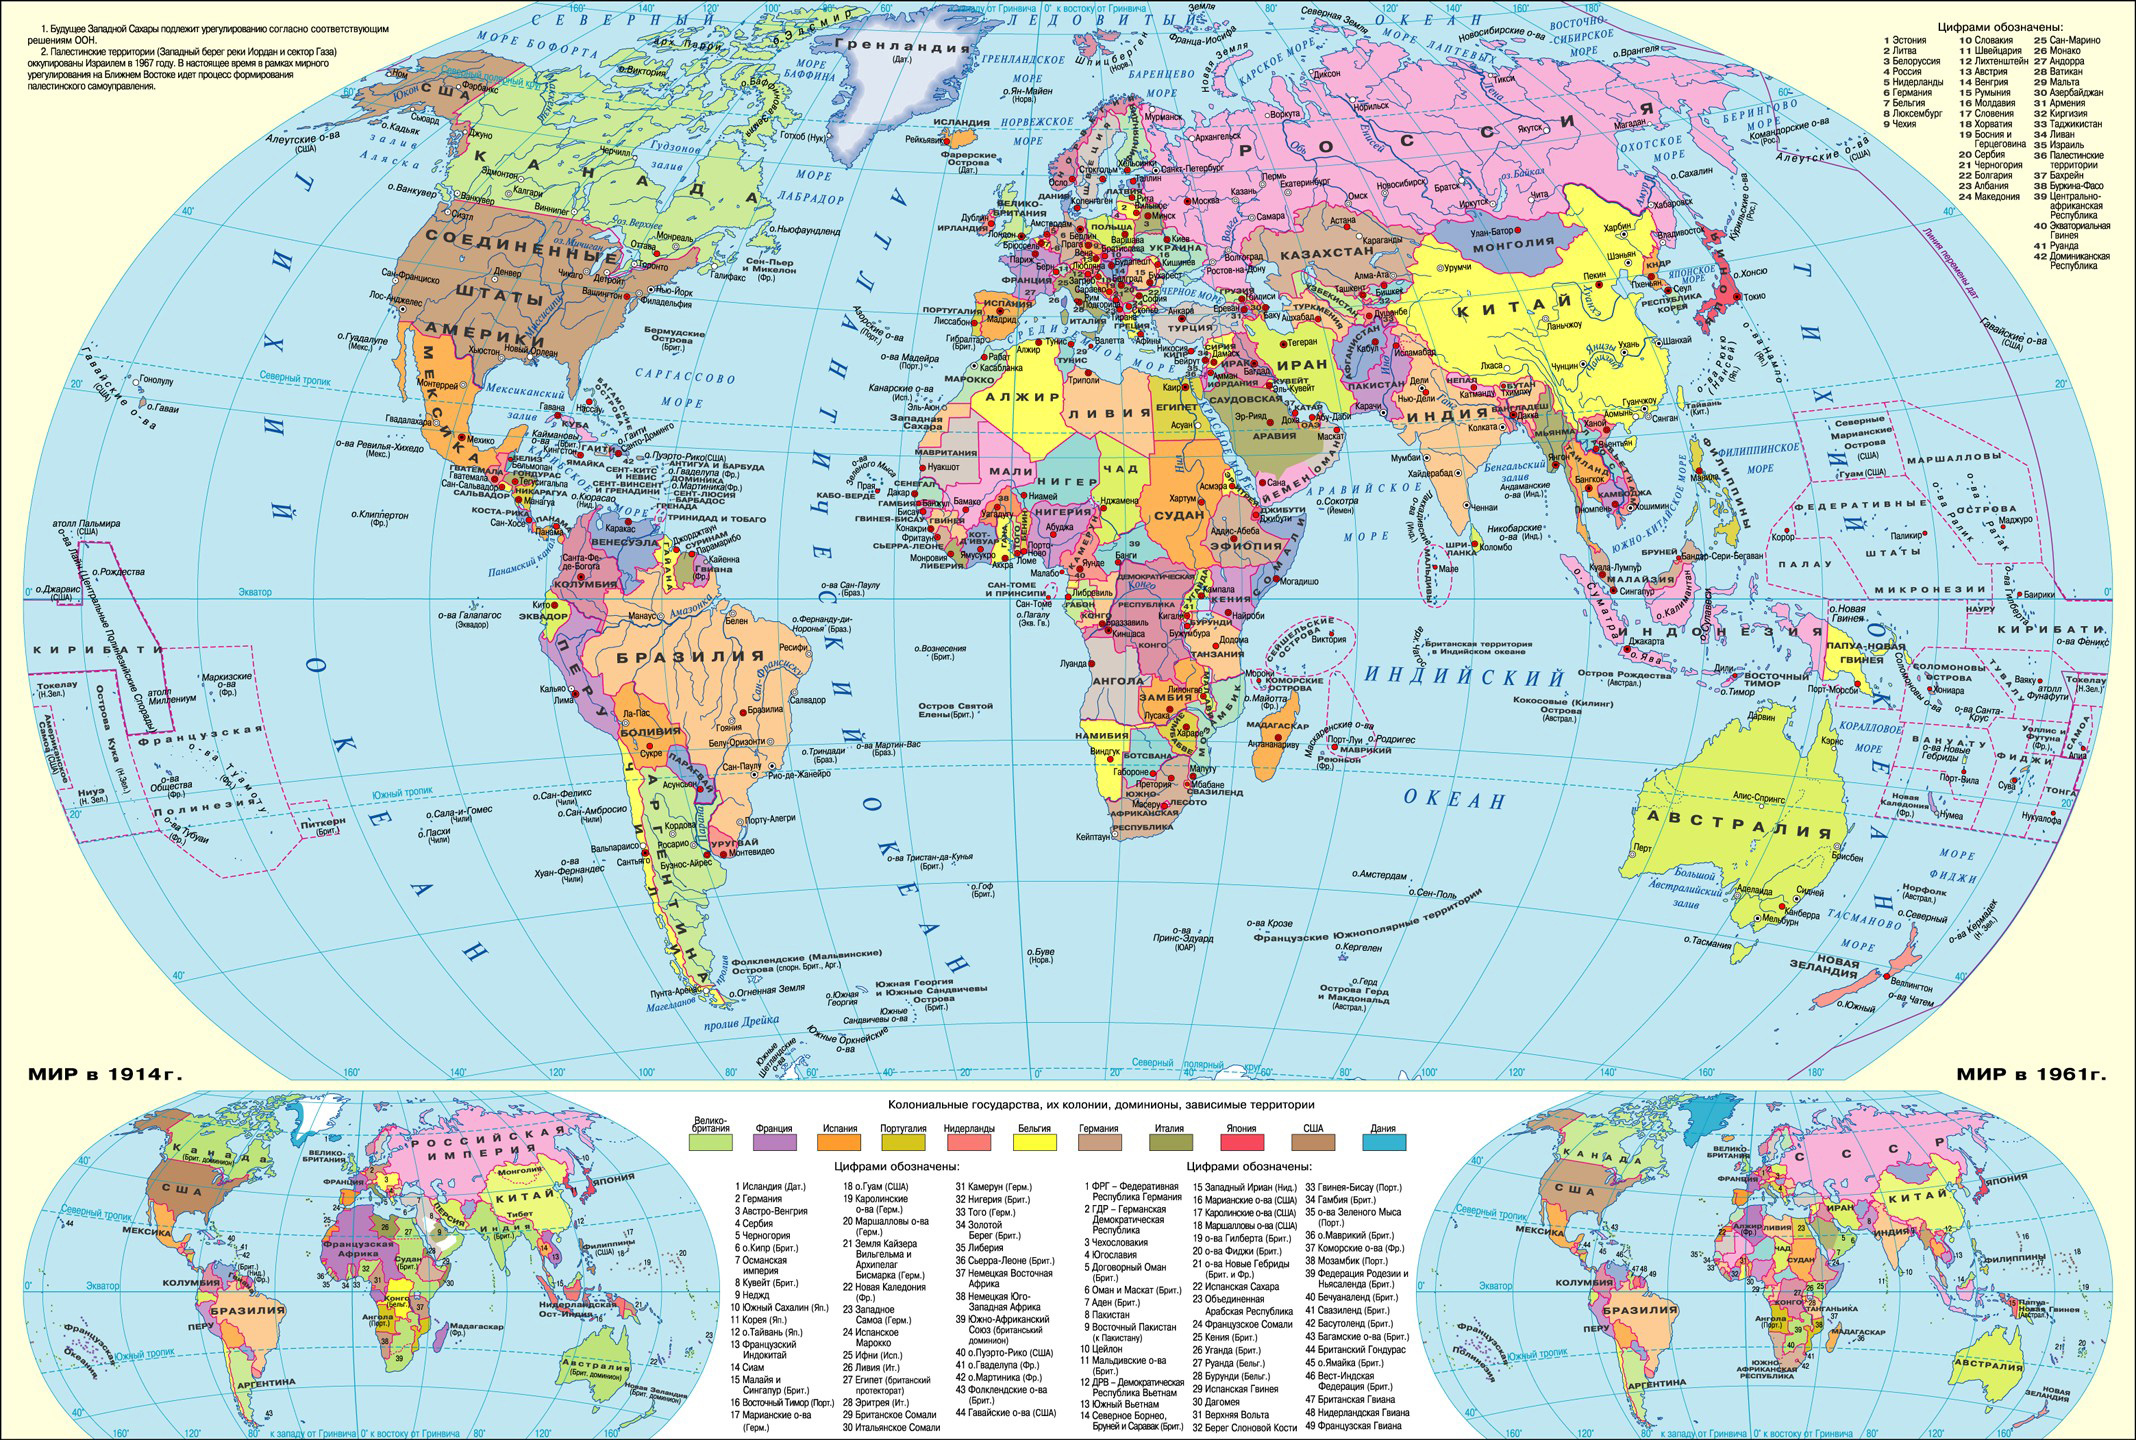 Ca mi карта мира